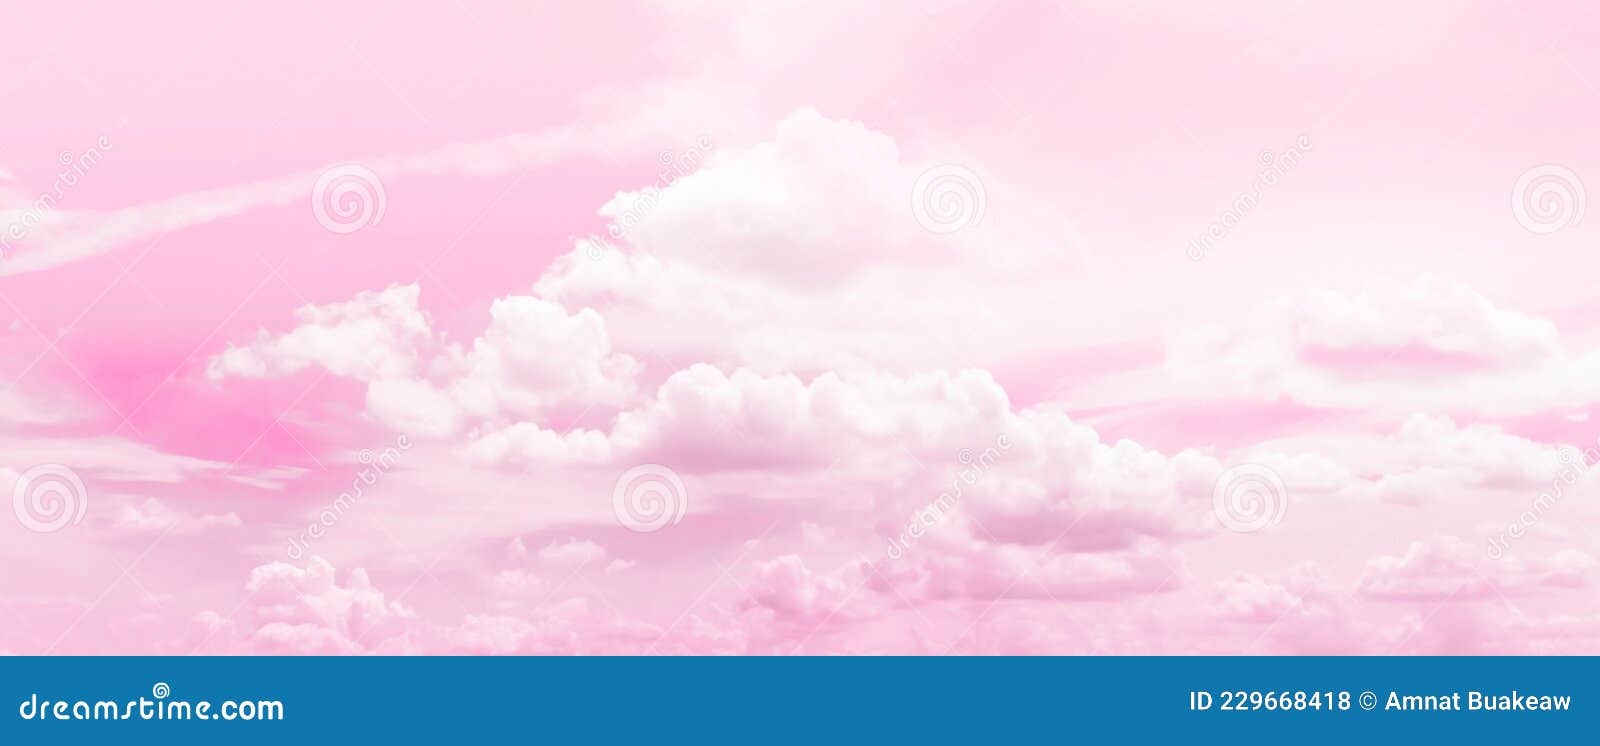 Aesthetic  Pink Sky Wallpaper Download  MobCup